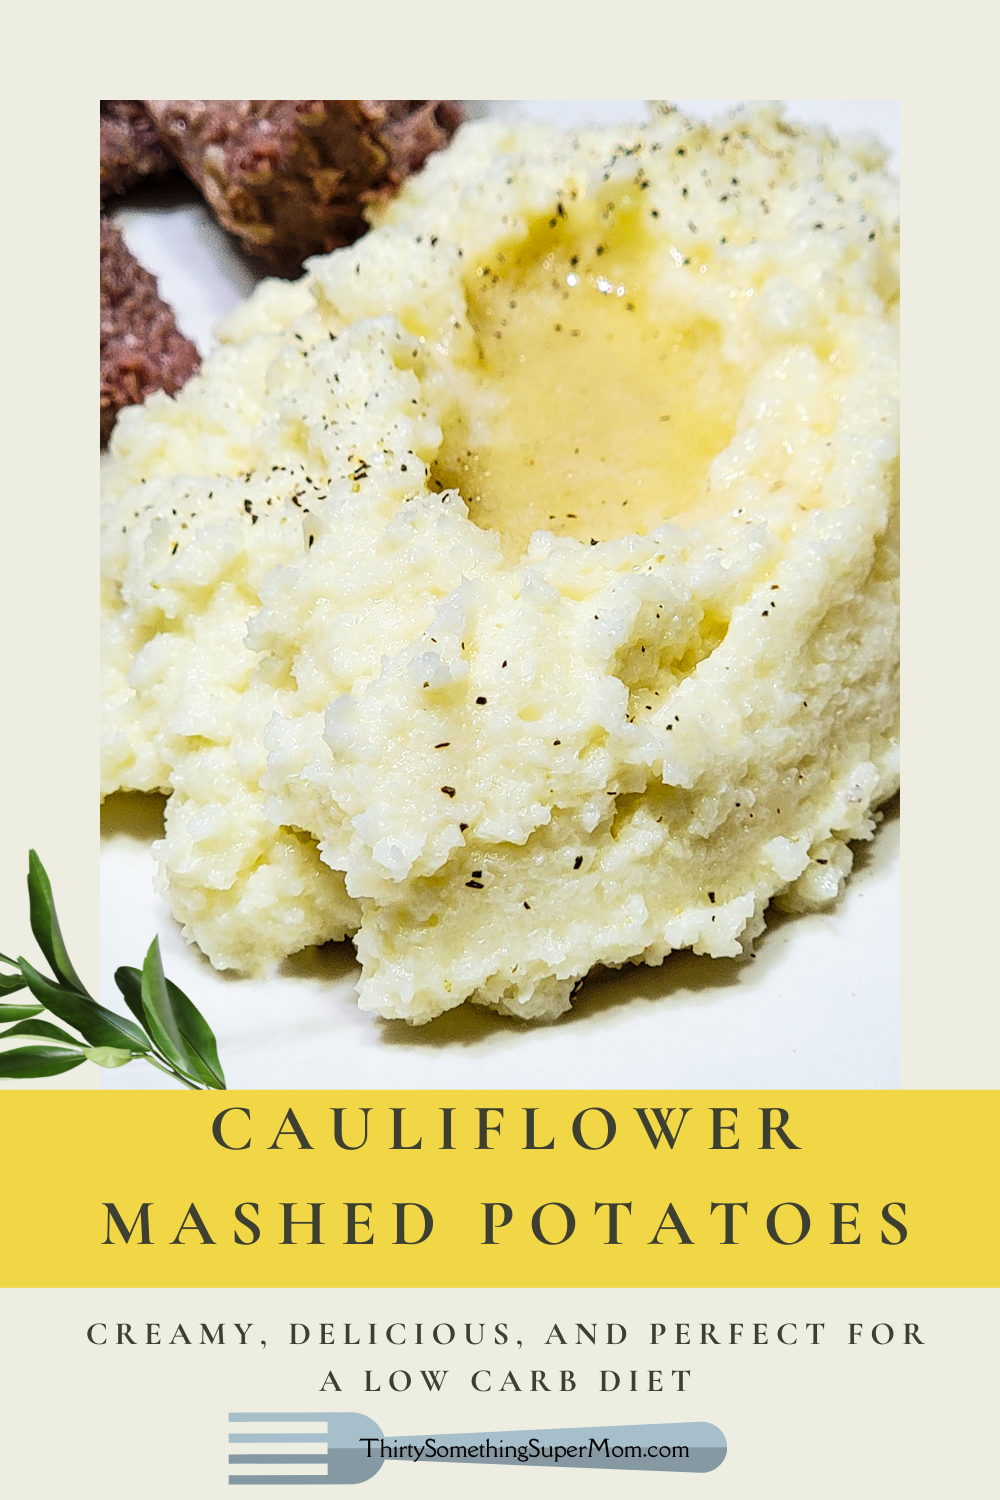 Keto Cauliflower Recipe for Mashed Potatoes 